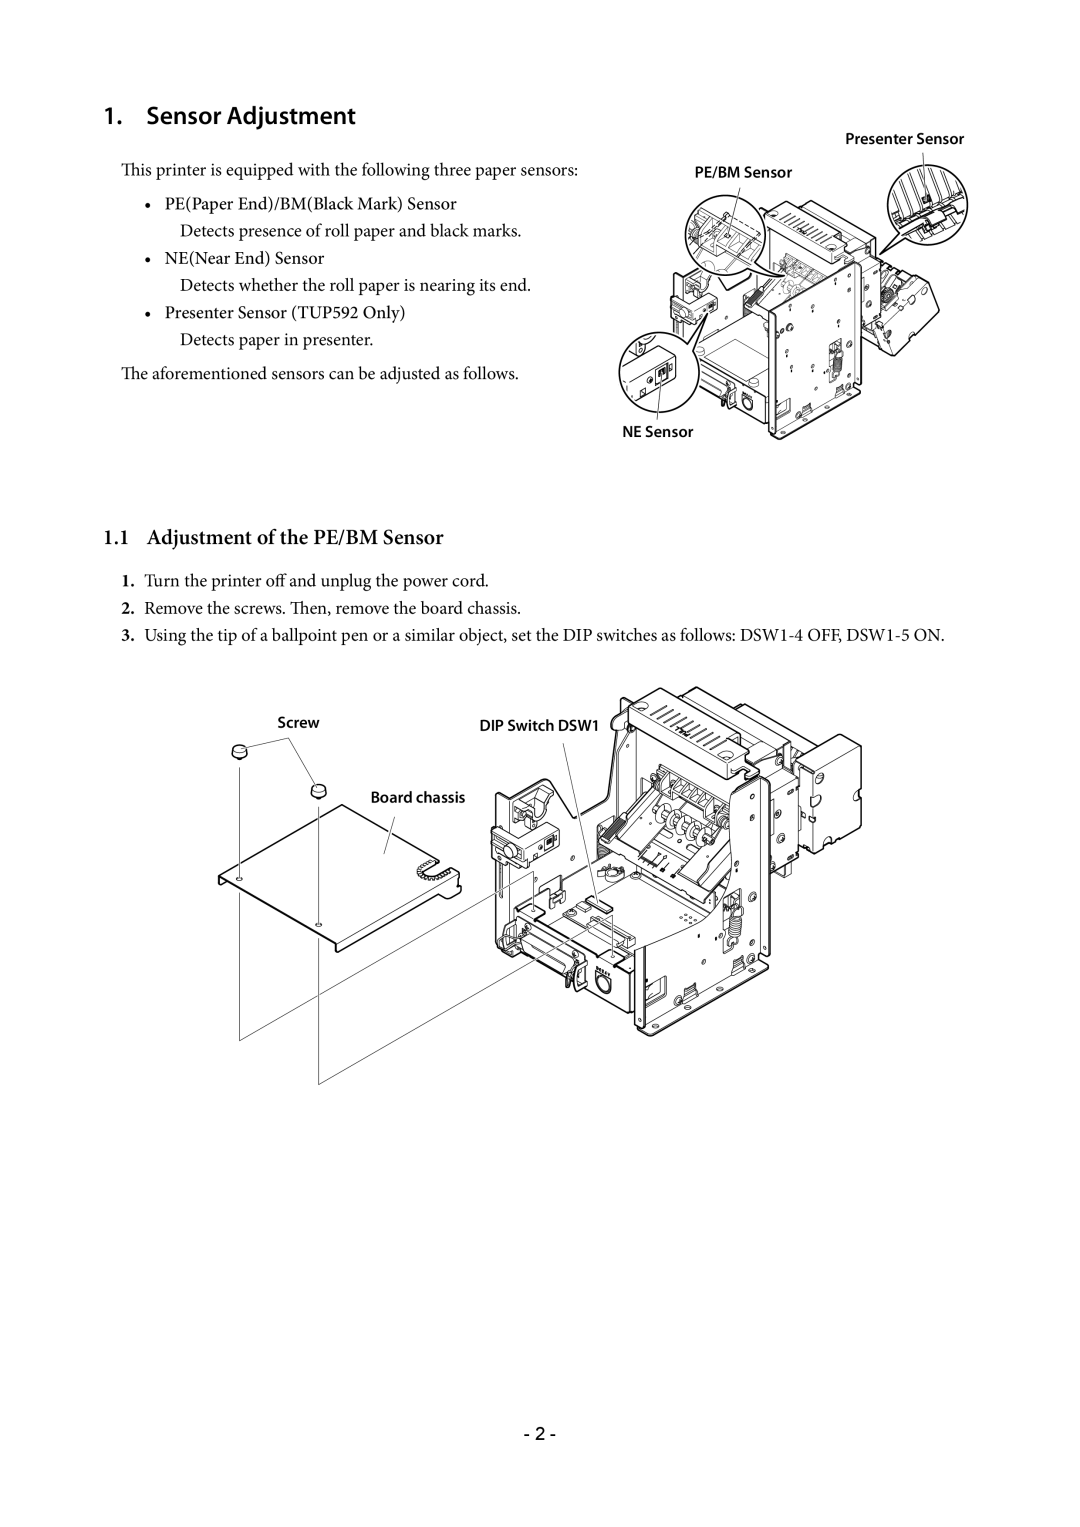 Star Micronics TUP500 technical manual Adjustment of the PE/BM Sensor, Sensor Adjustment 